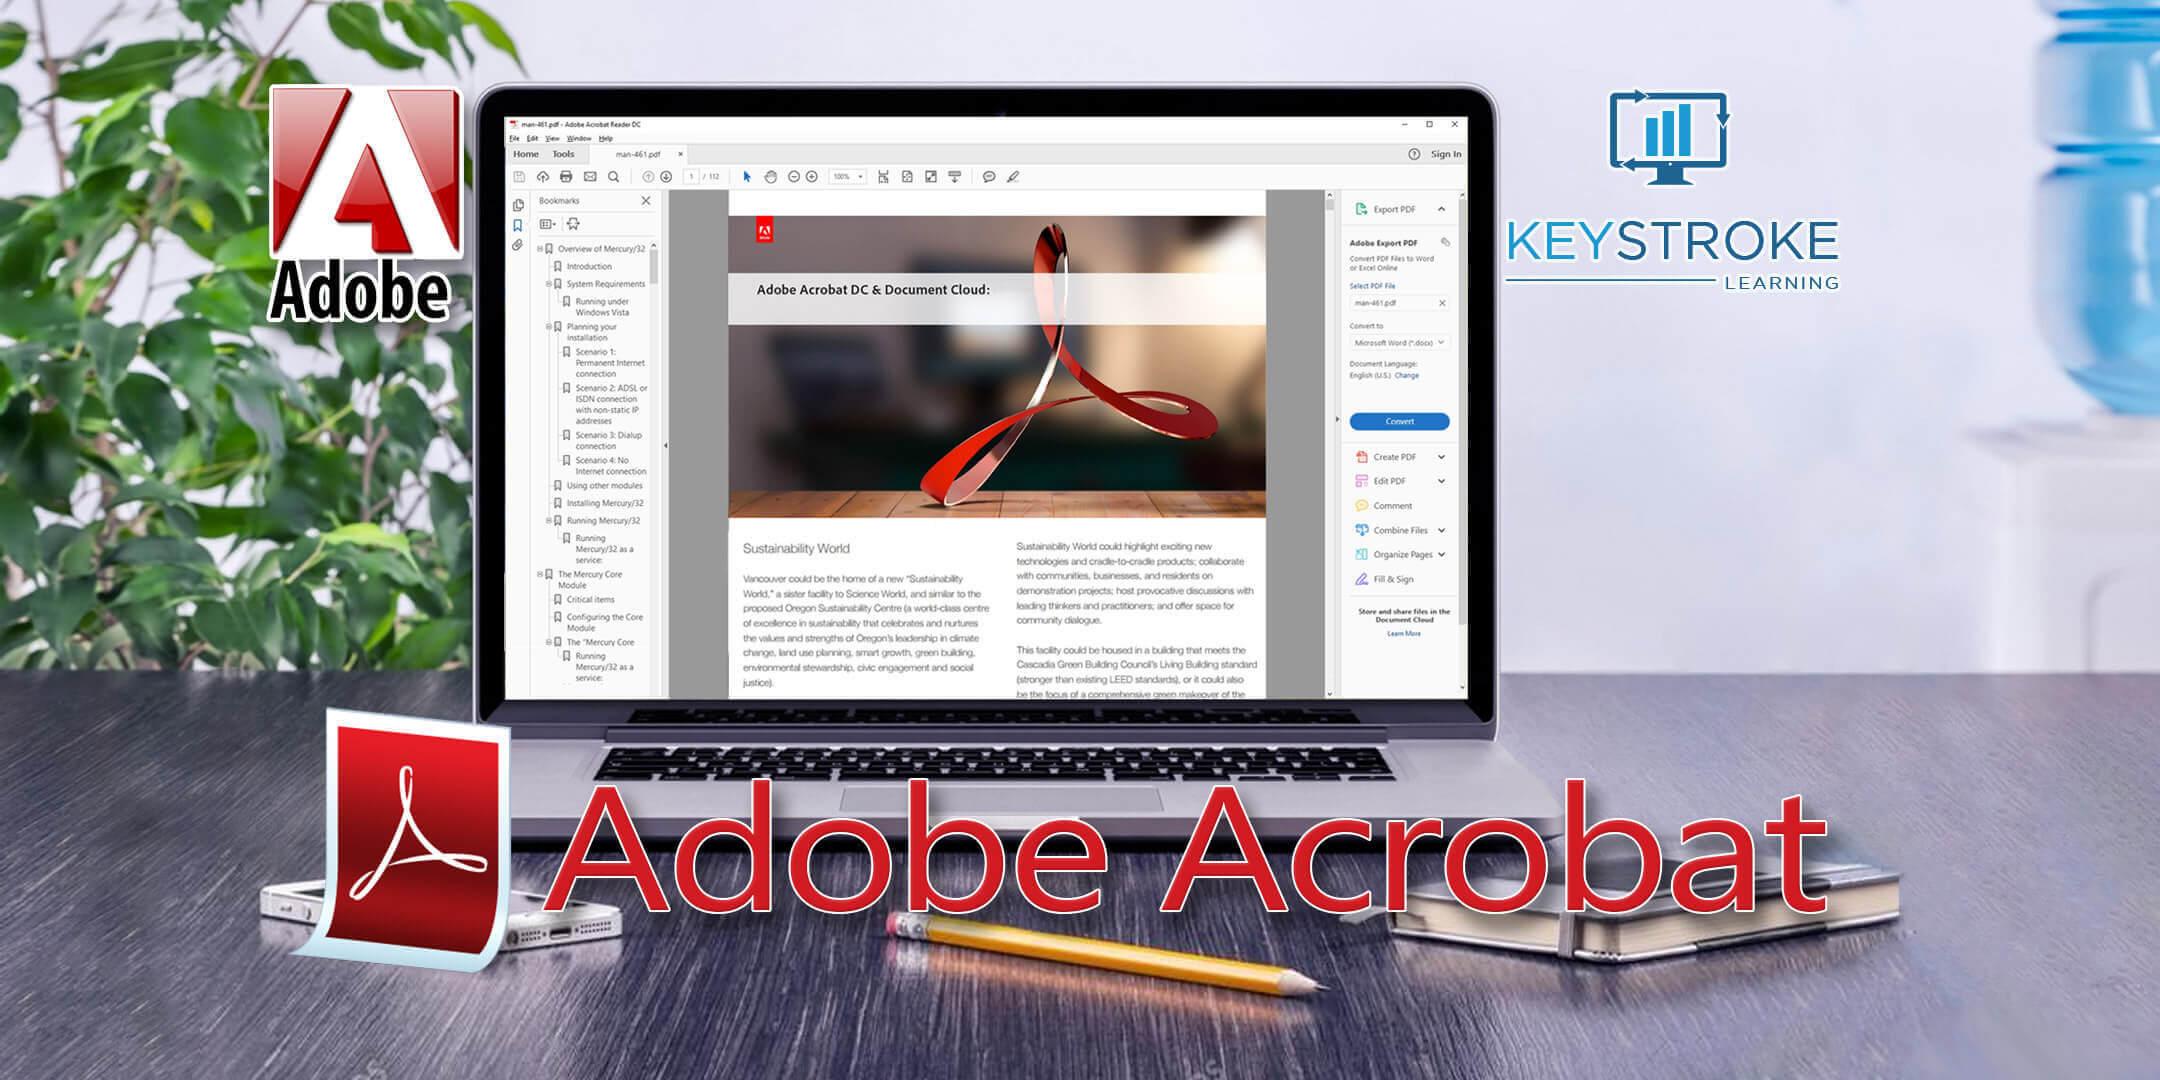 Live Online - Adobe Acrobat Introduction